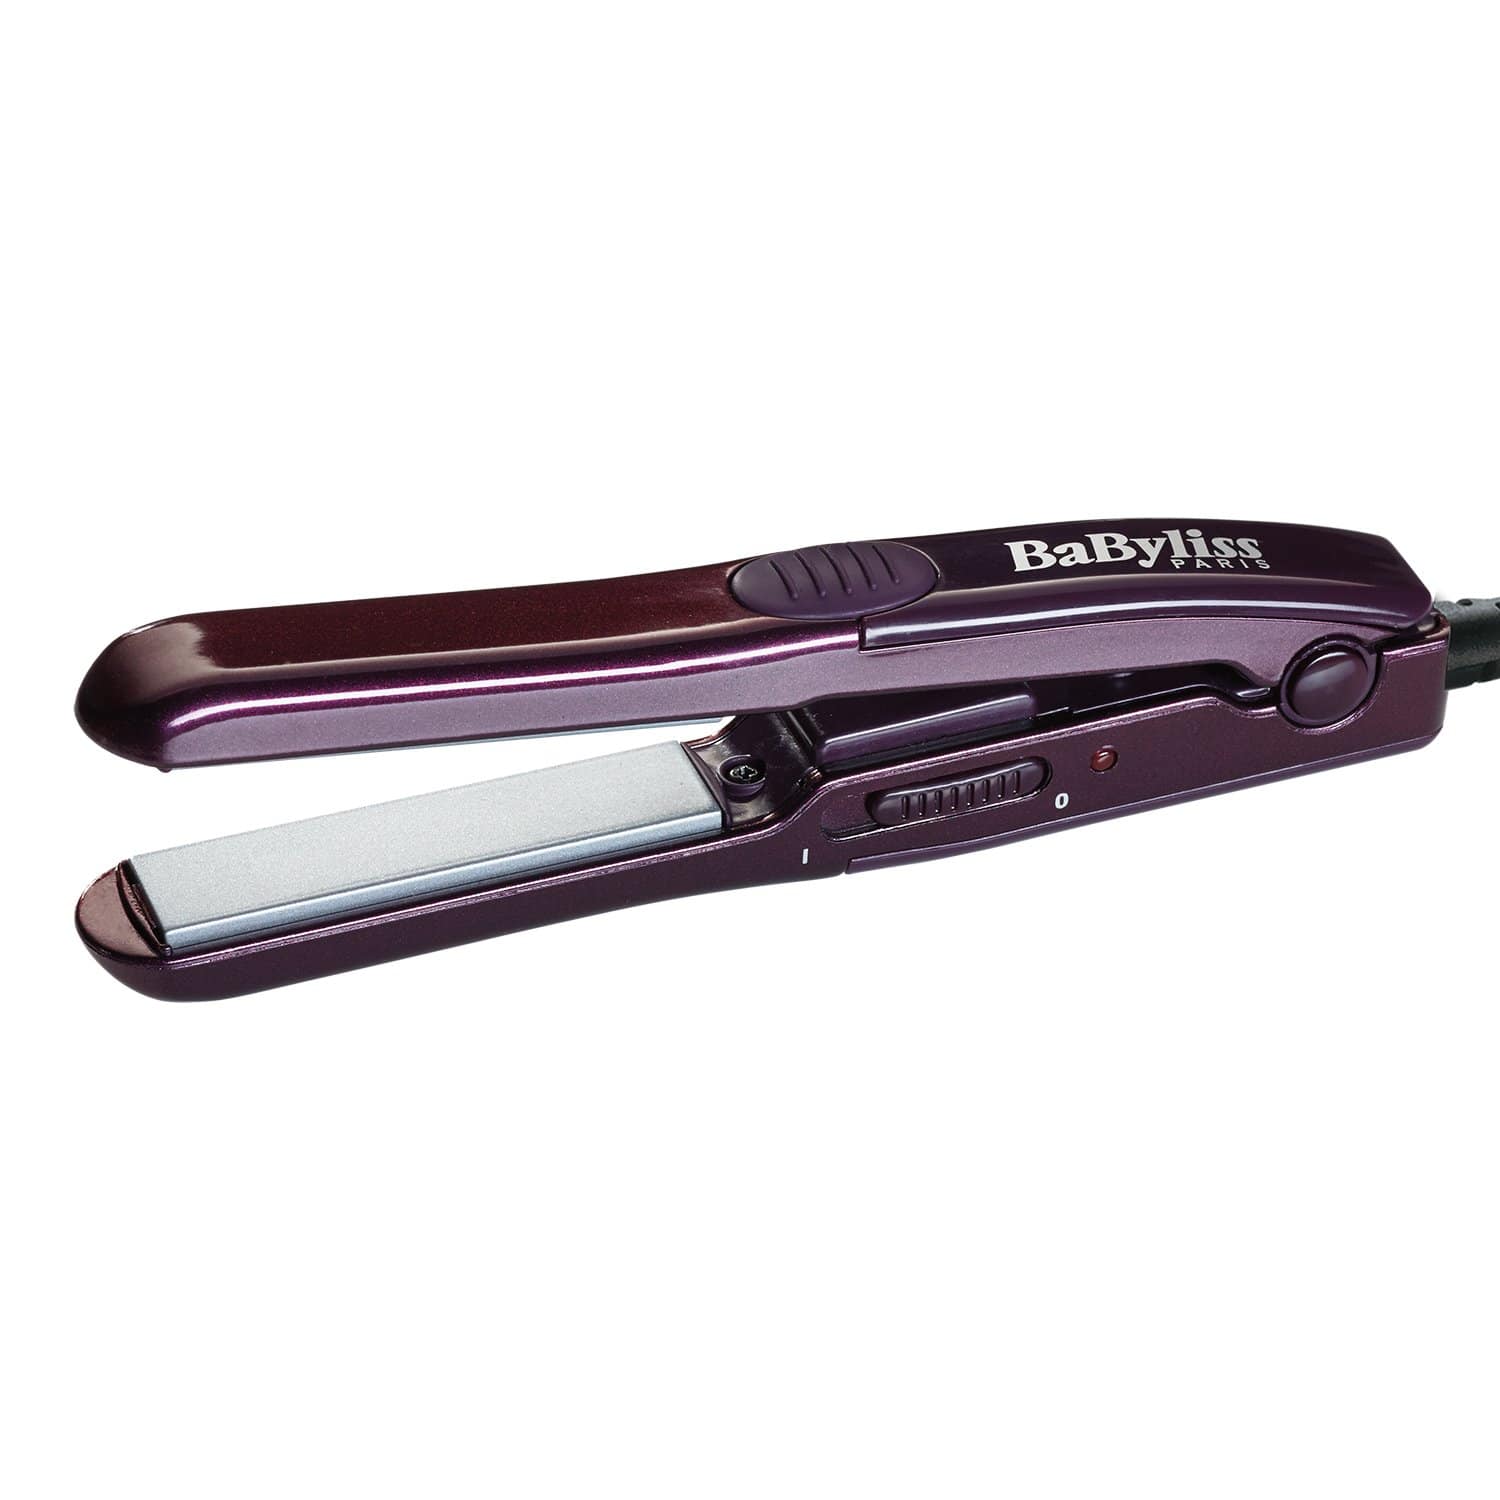 BaByliss Ipro 230 Steam Hair Straightener with Free Mini Travel Straightener